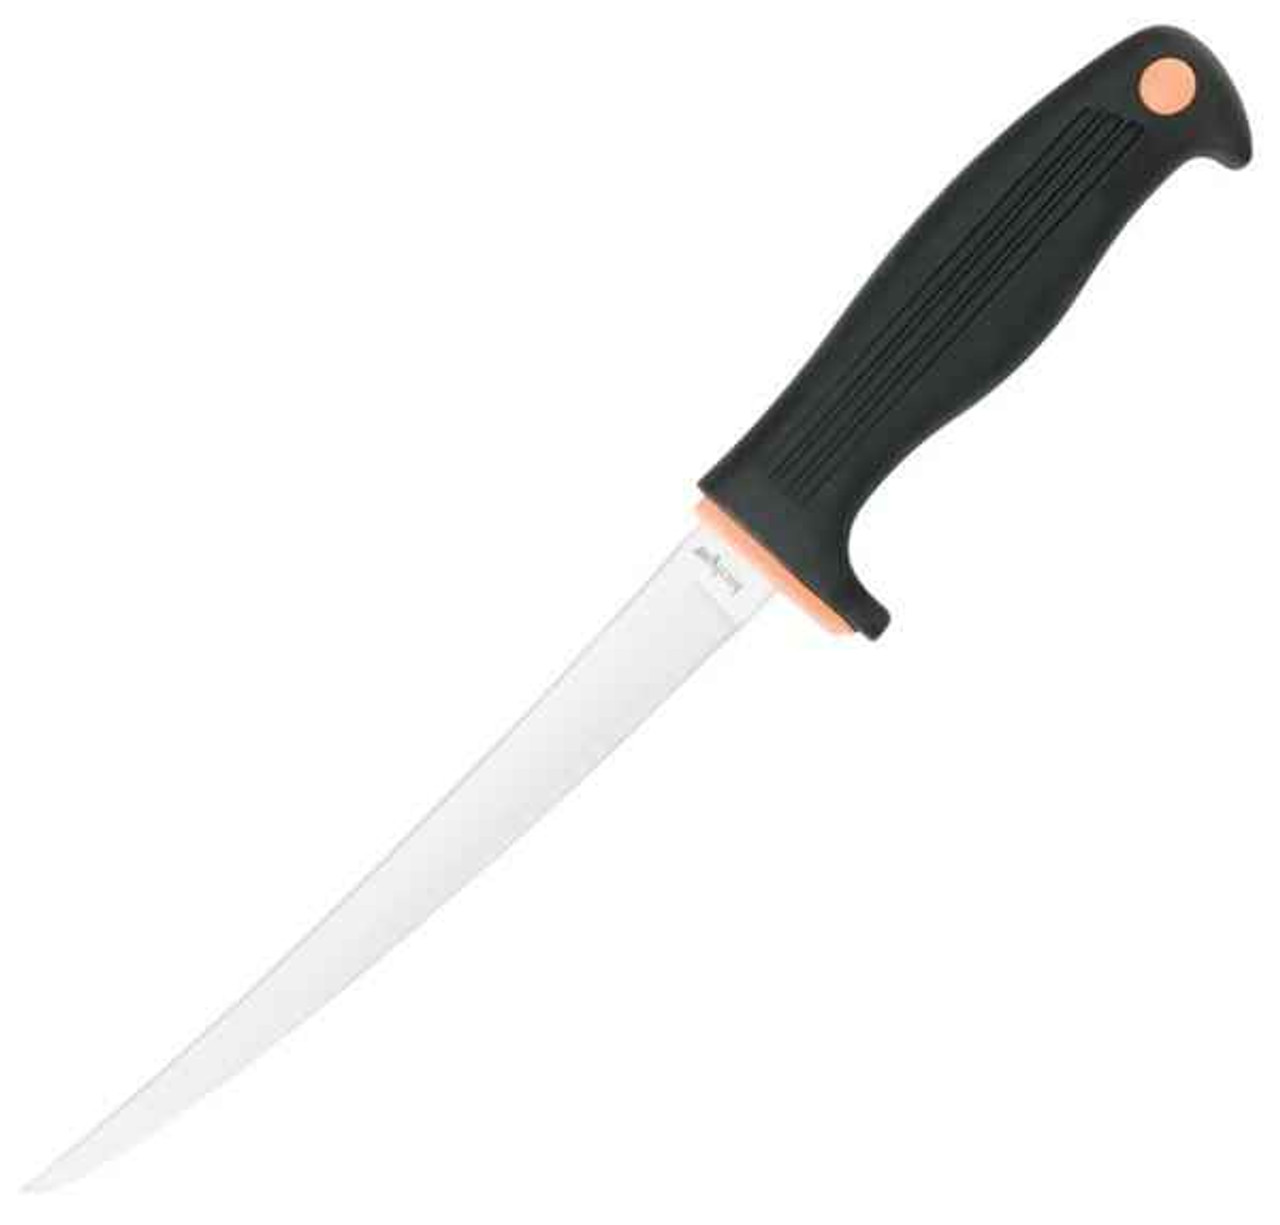 Kershaw 1257 Fillet Knife, 7 420J2 SS, Plain Blade, Co-polymer Handle